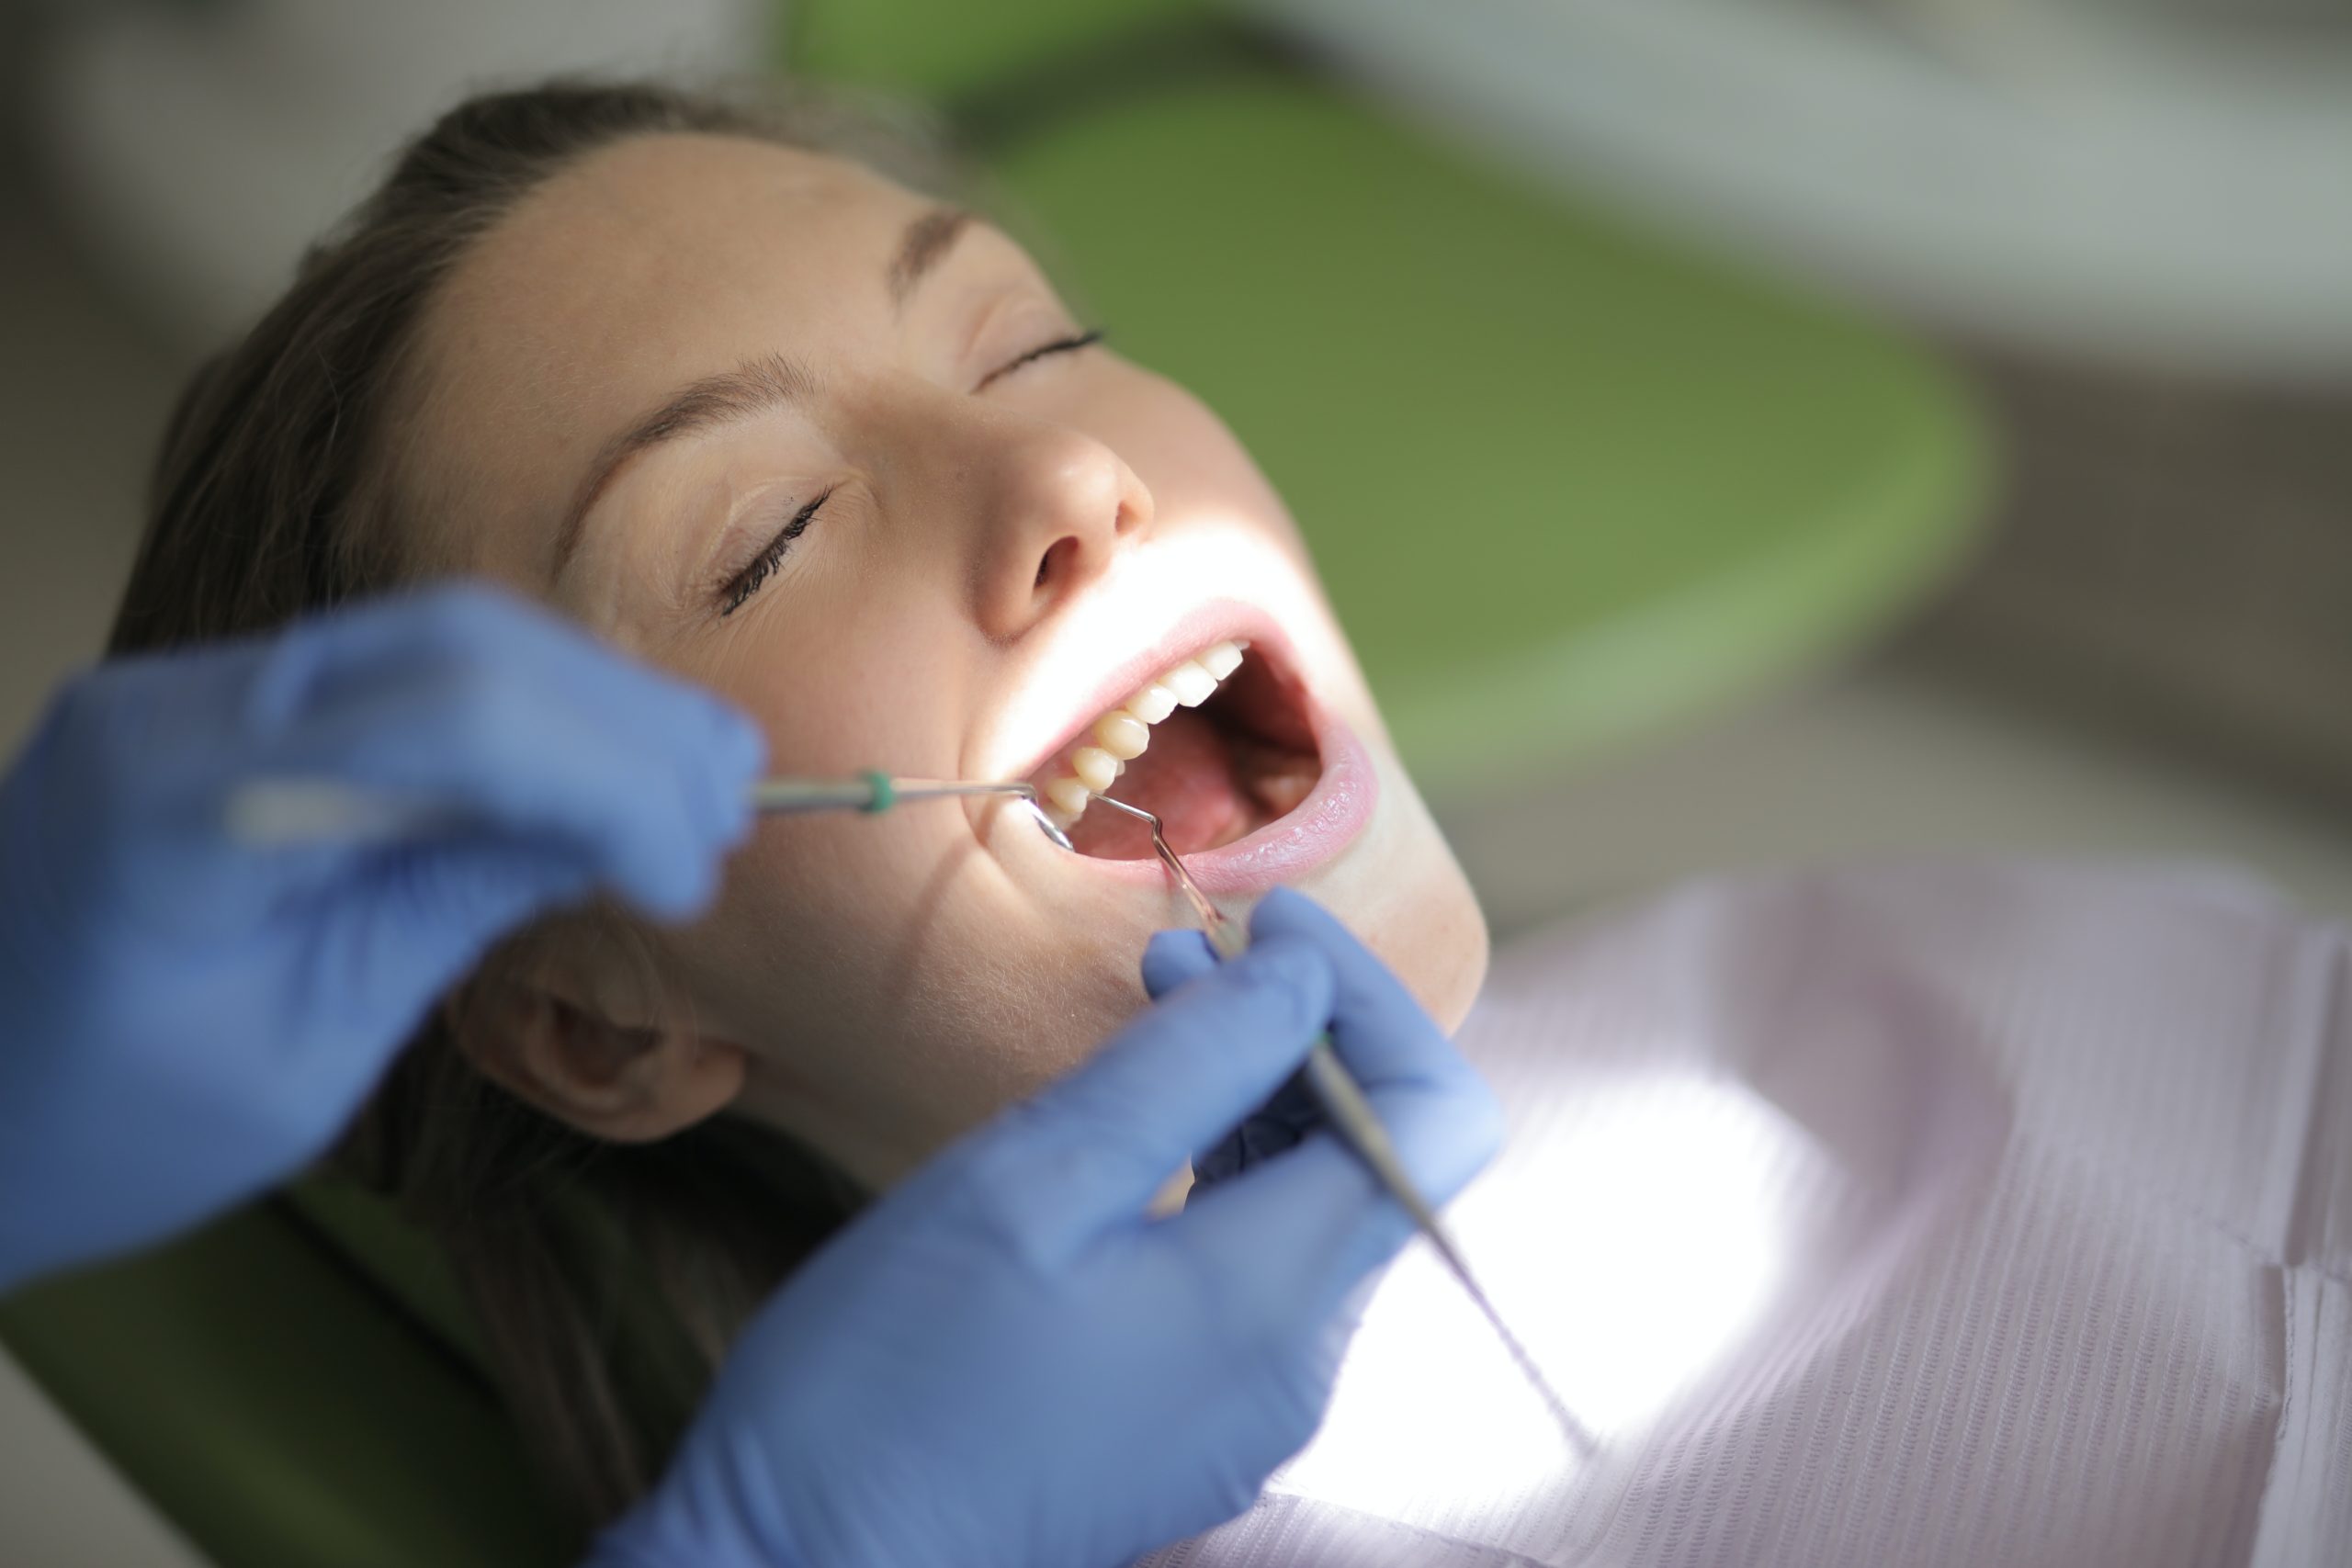 Woman undergoing deep dental cleaning procedure